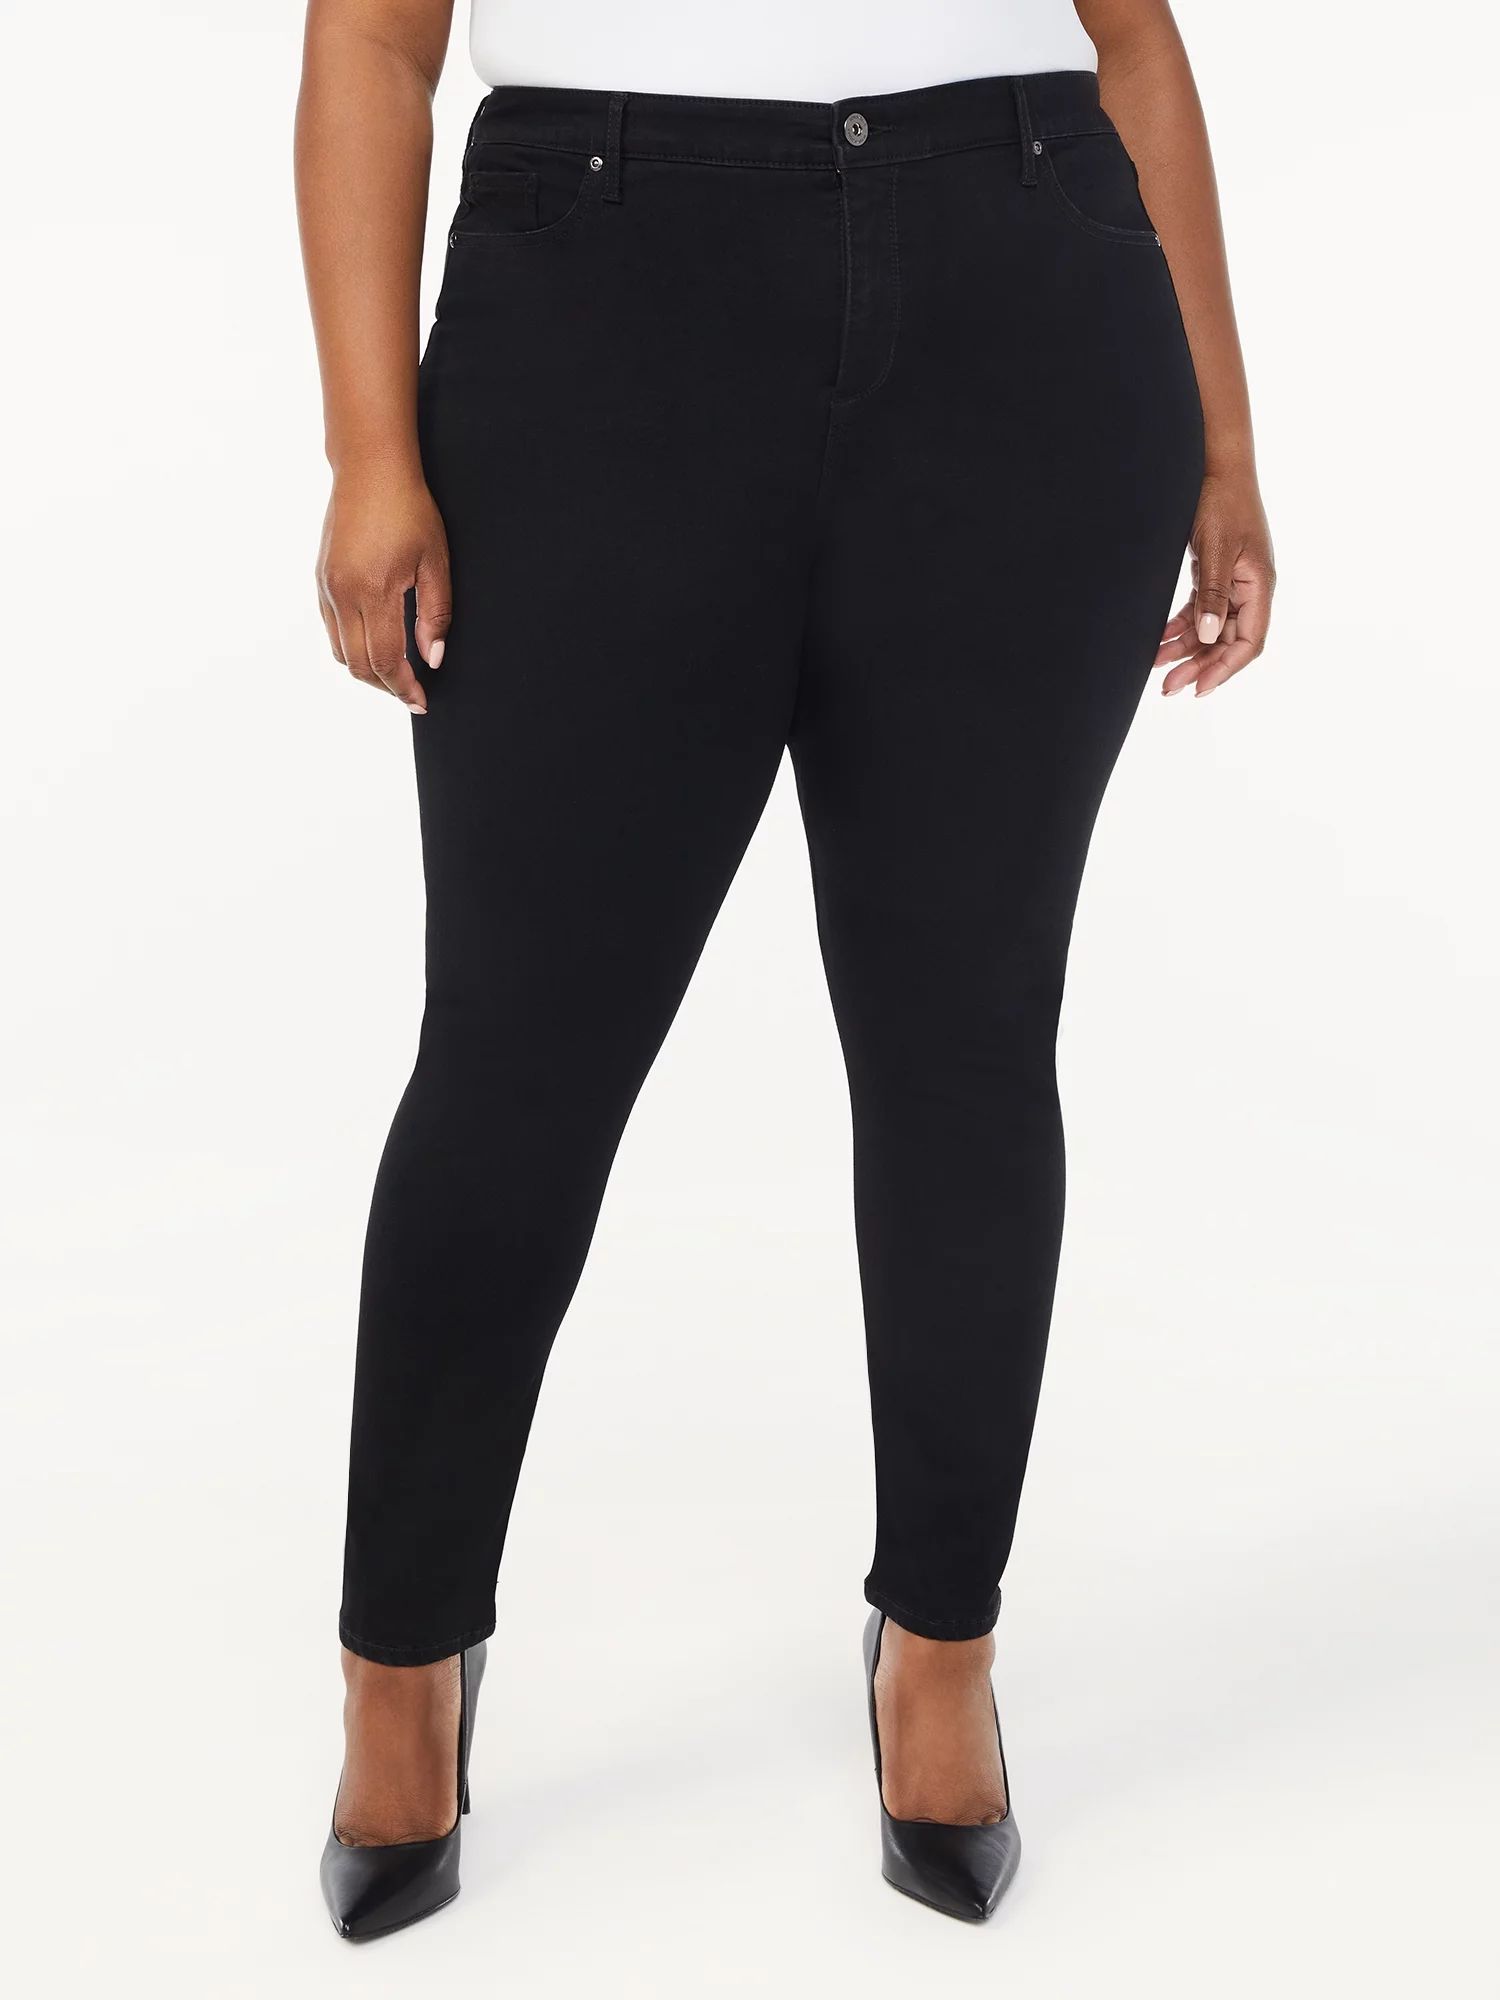 Sofia Jeans by Sofia Vergara Women’s Plus Size Super High Rise Seamless Jeans | Walmart (US)